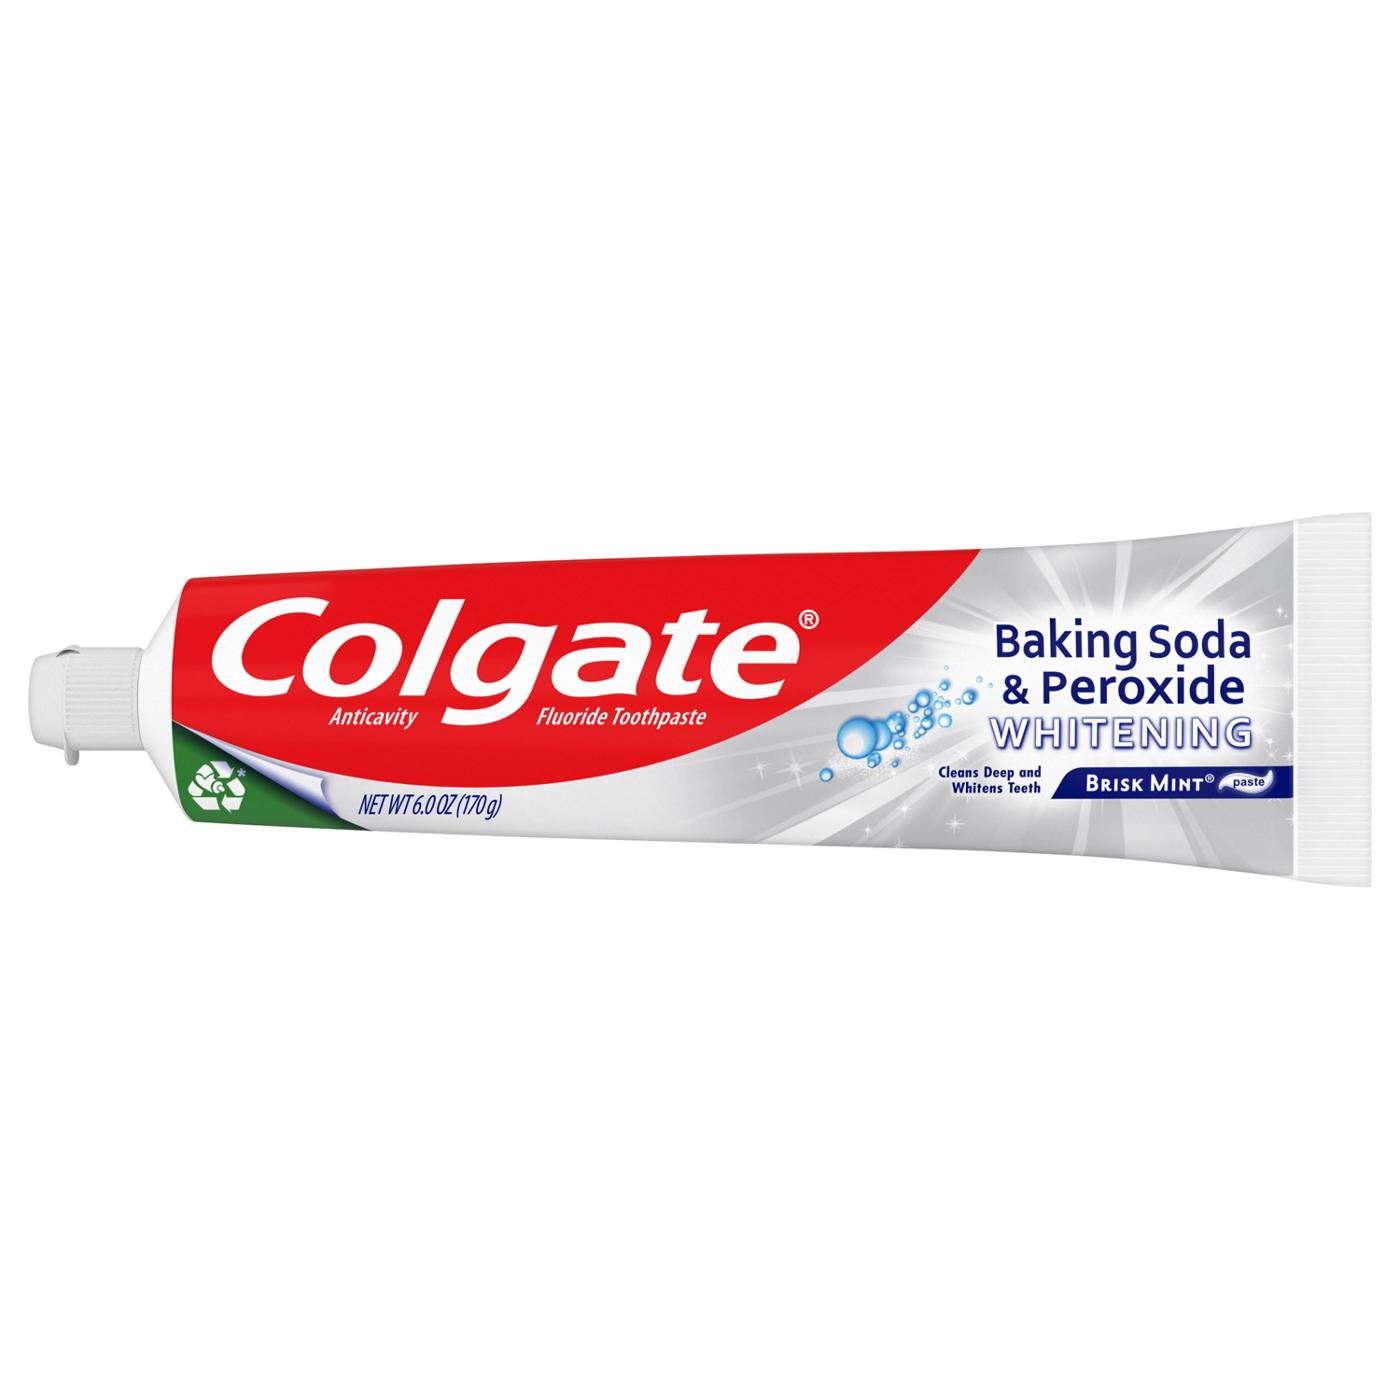 Colgate Baking Soda & Peroxide Anticavity Toothpaste 3 pk - Brisk Mint; image 2 of 3